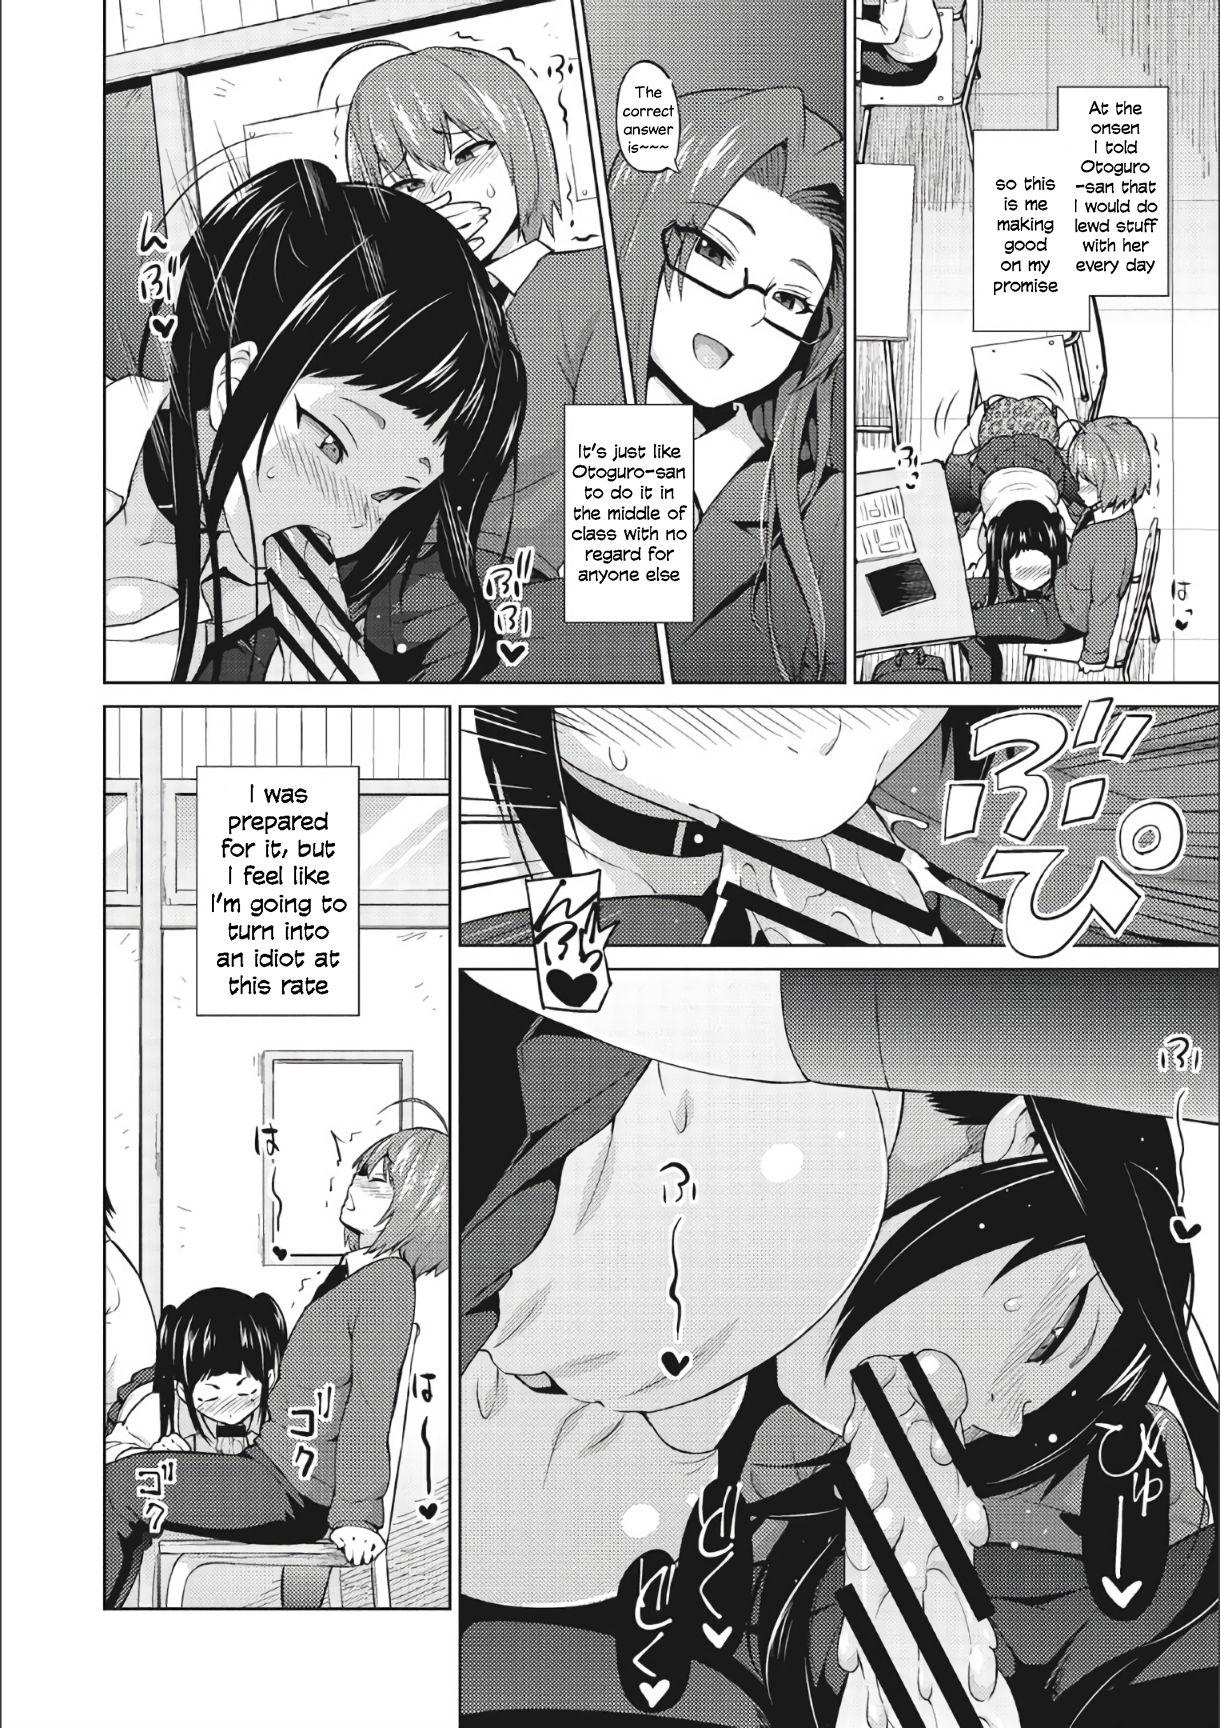 Tribbing Otoguro Miya no Oasobi #3 Chicks - Page 2